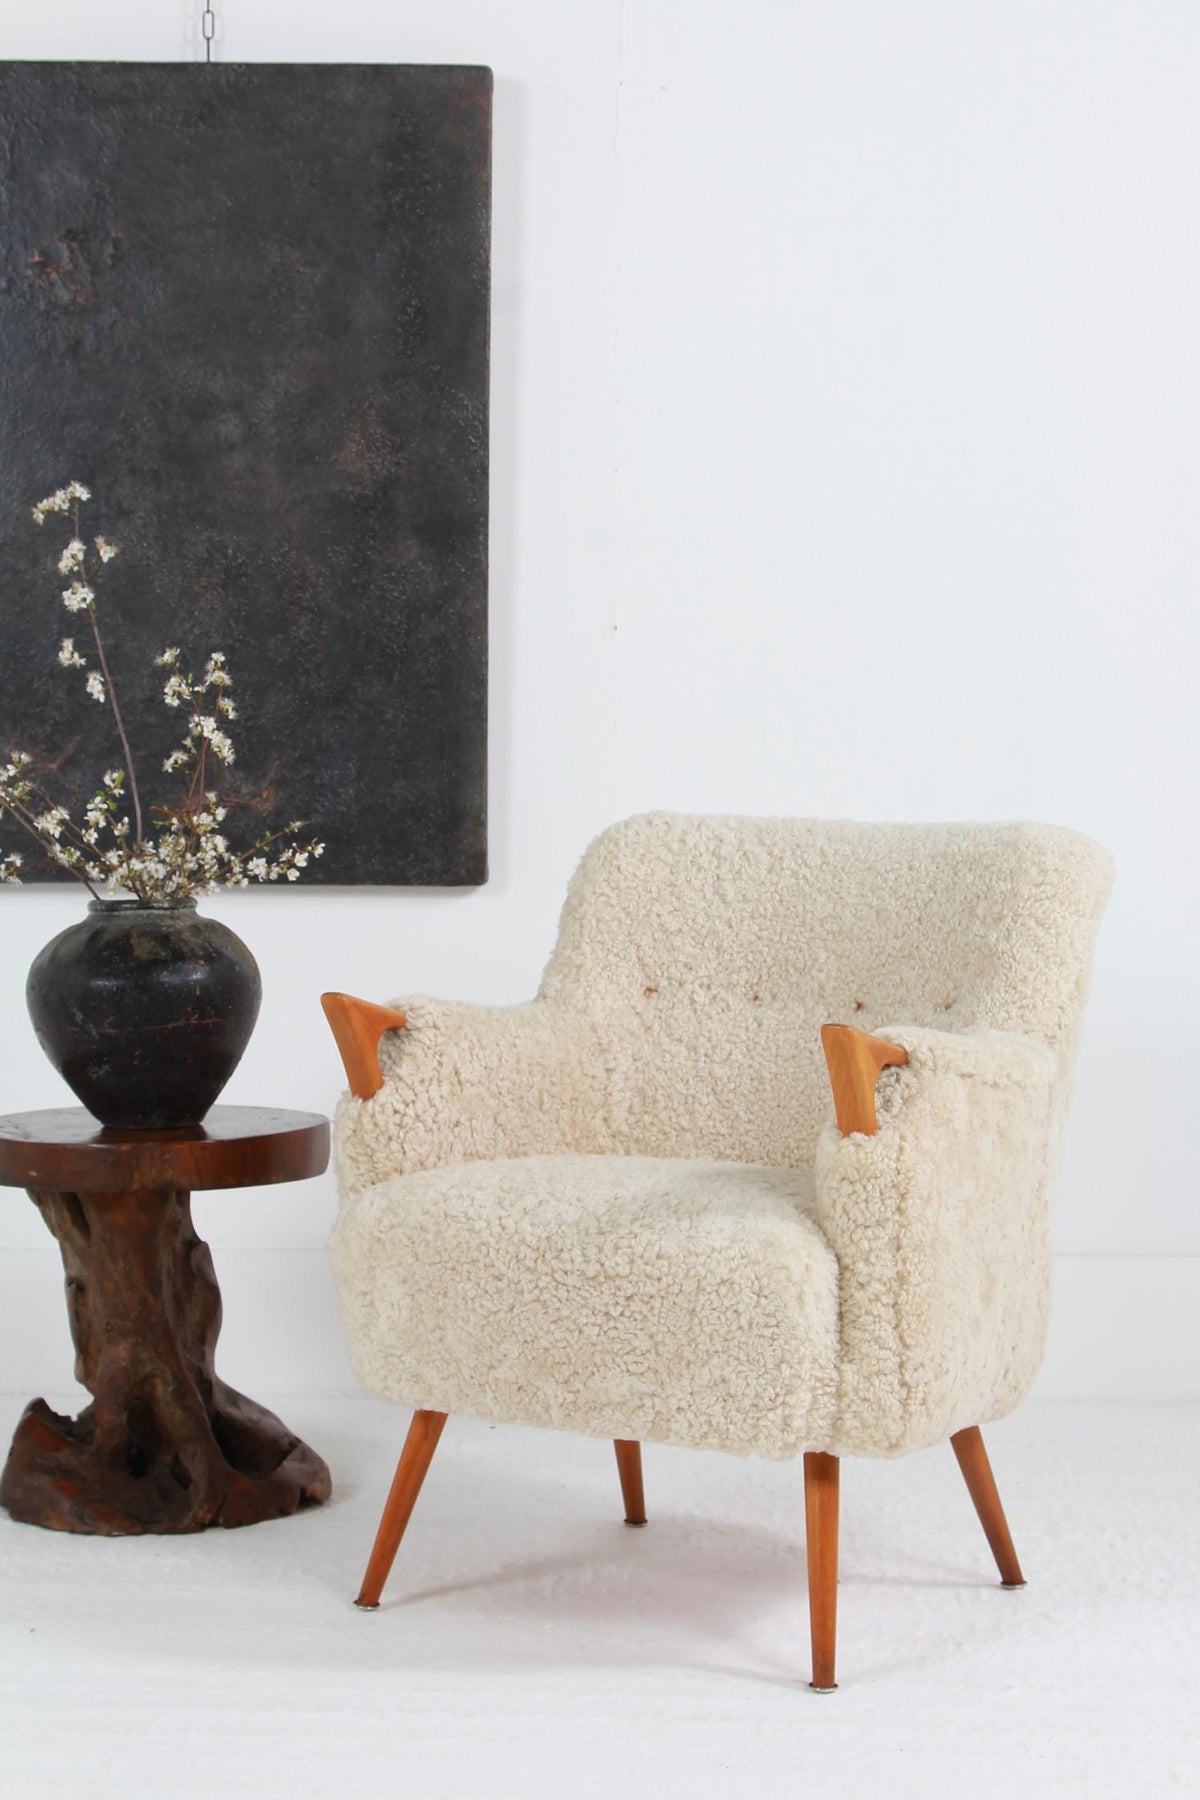 Danish Mid-Century Sculptural Lounge Chair in Natural Sheepskin